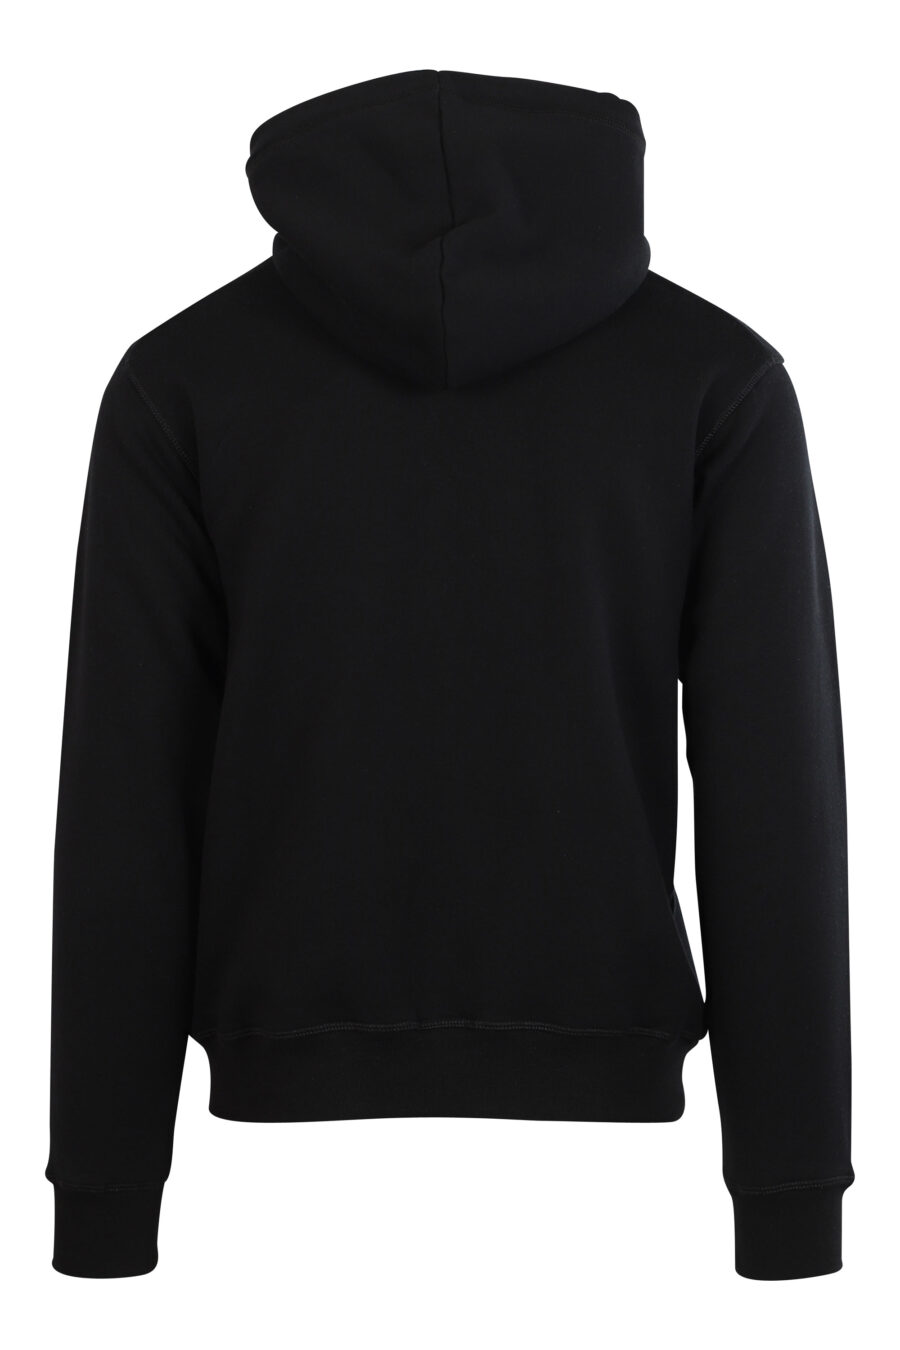 Black hooded sweatshirt with white mini logo - 8052134120743 2